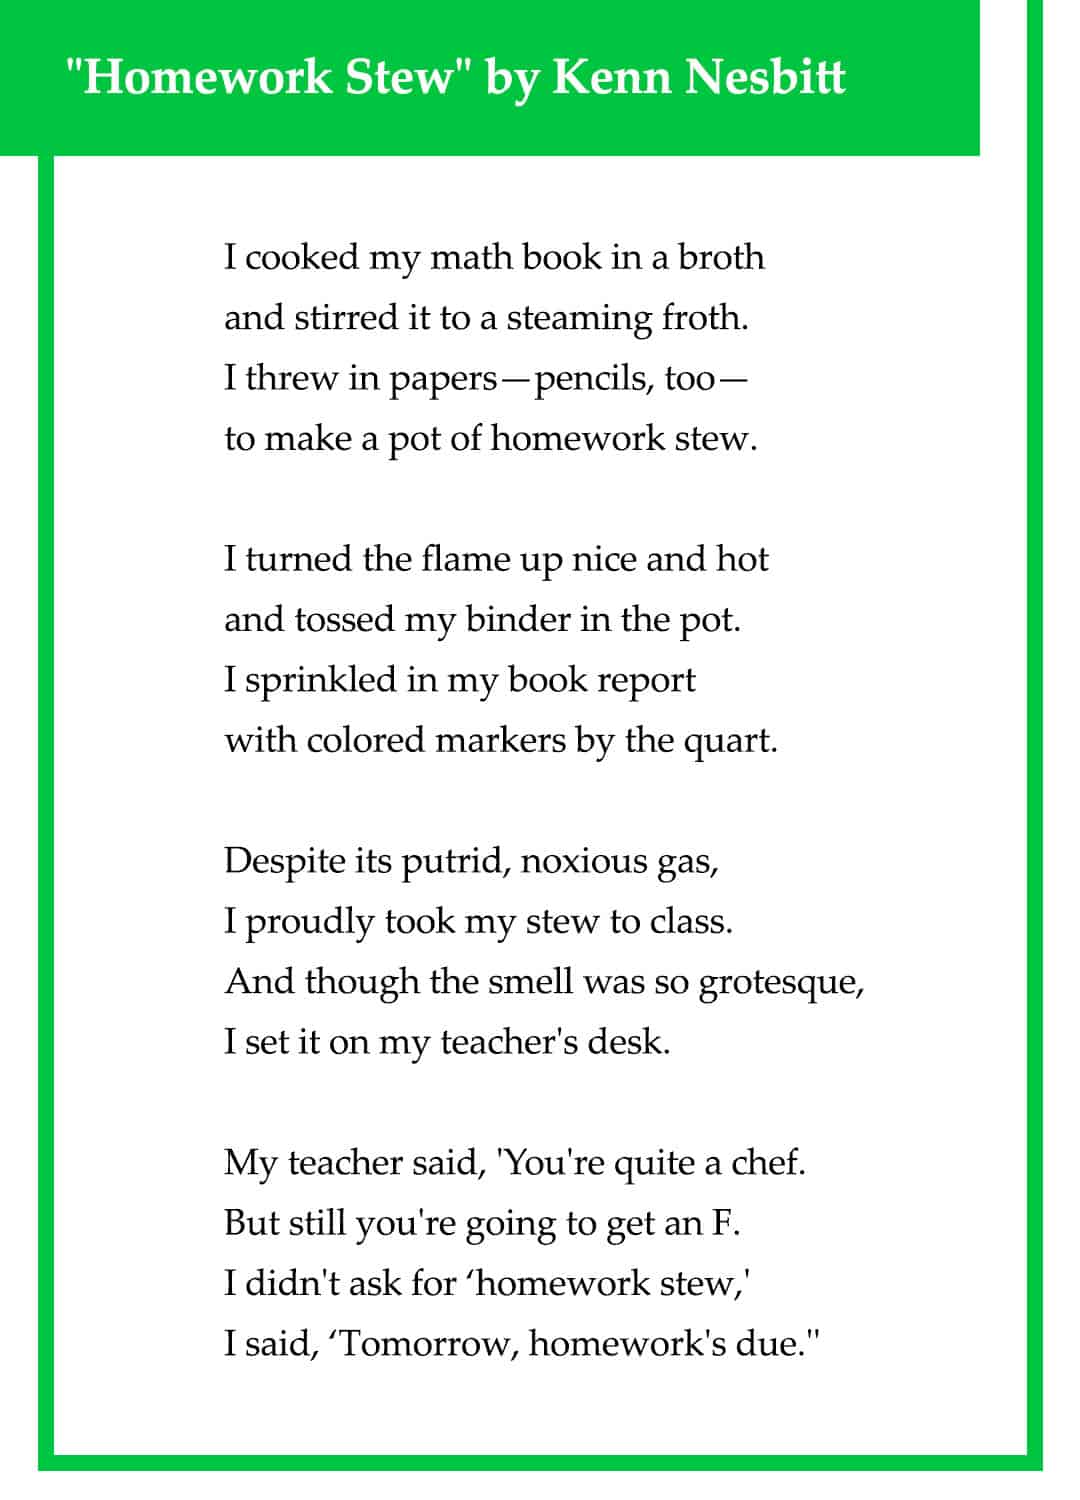 homework stew poem